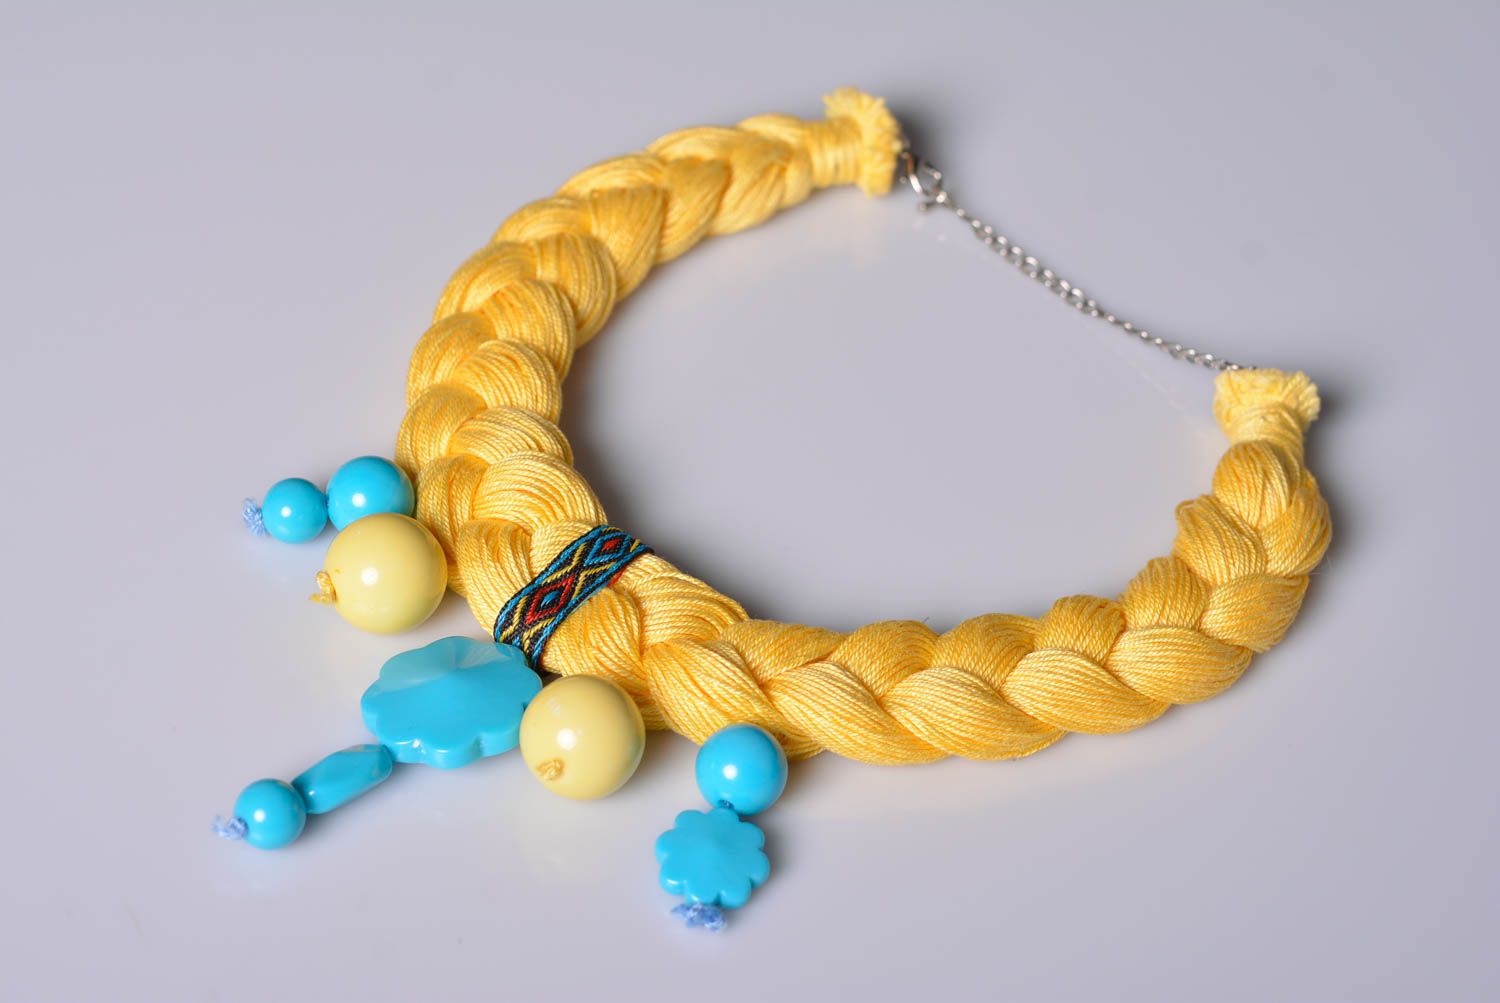 Handmade plait necklace designer jewelry fashion necklaces for women gift ideas photo 1